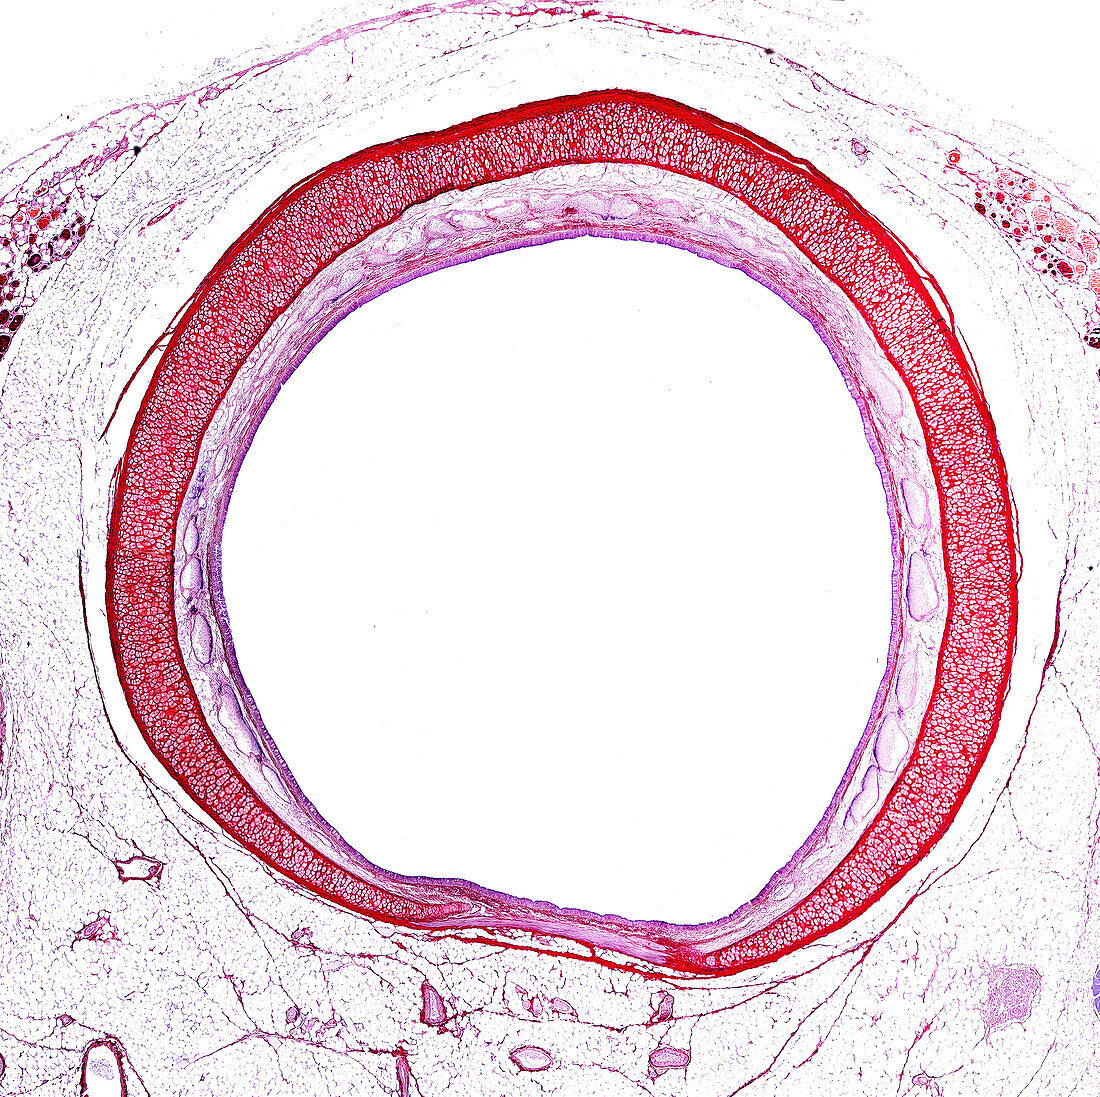 Trachea, light micrograph